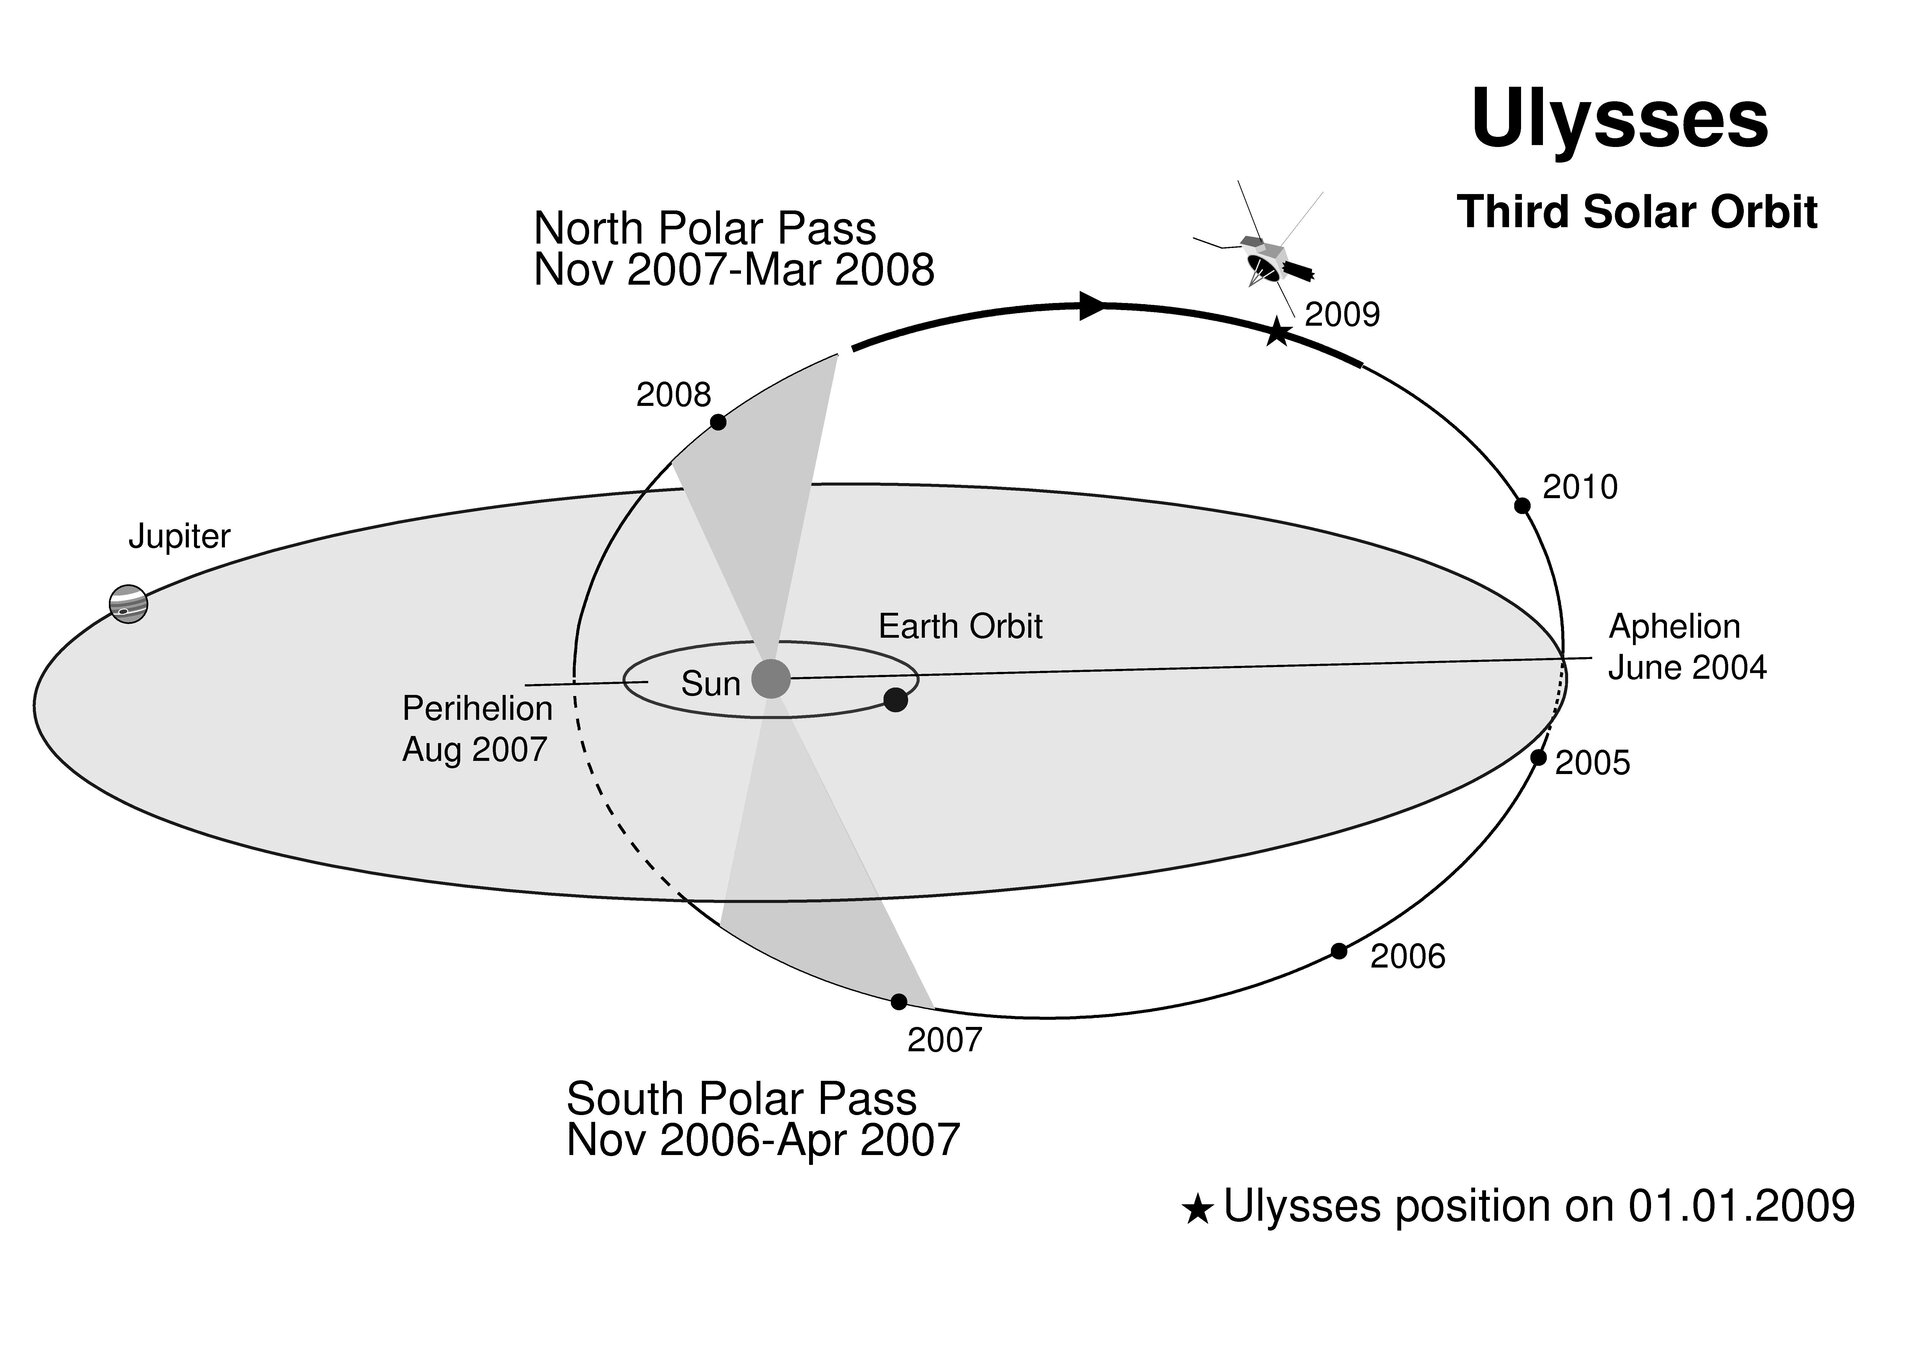 Ulysses third solar orbit